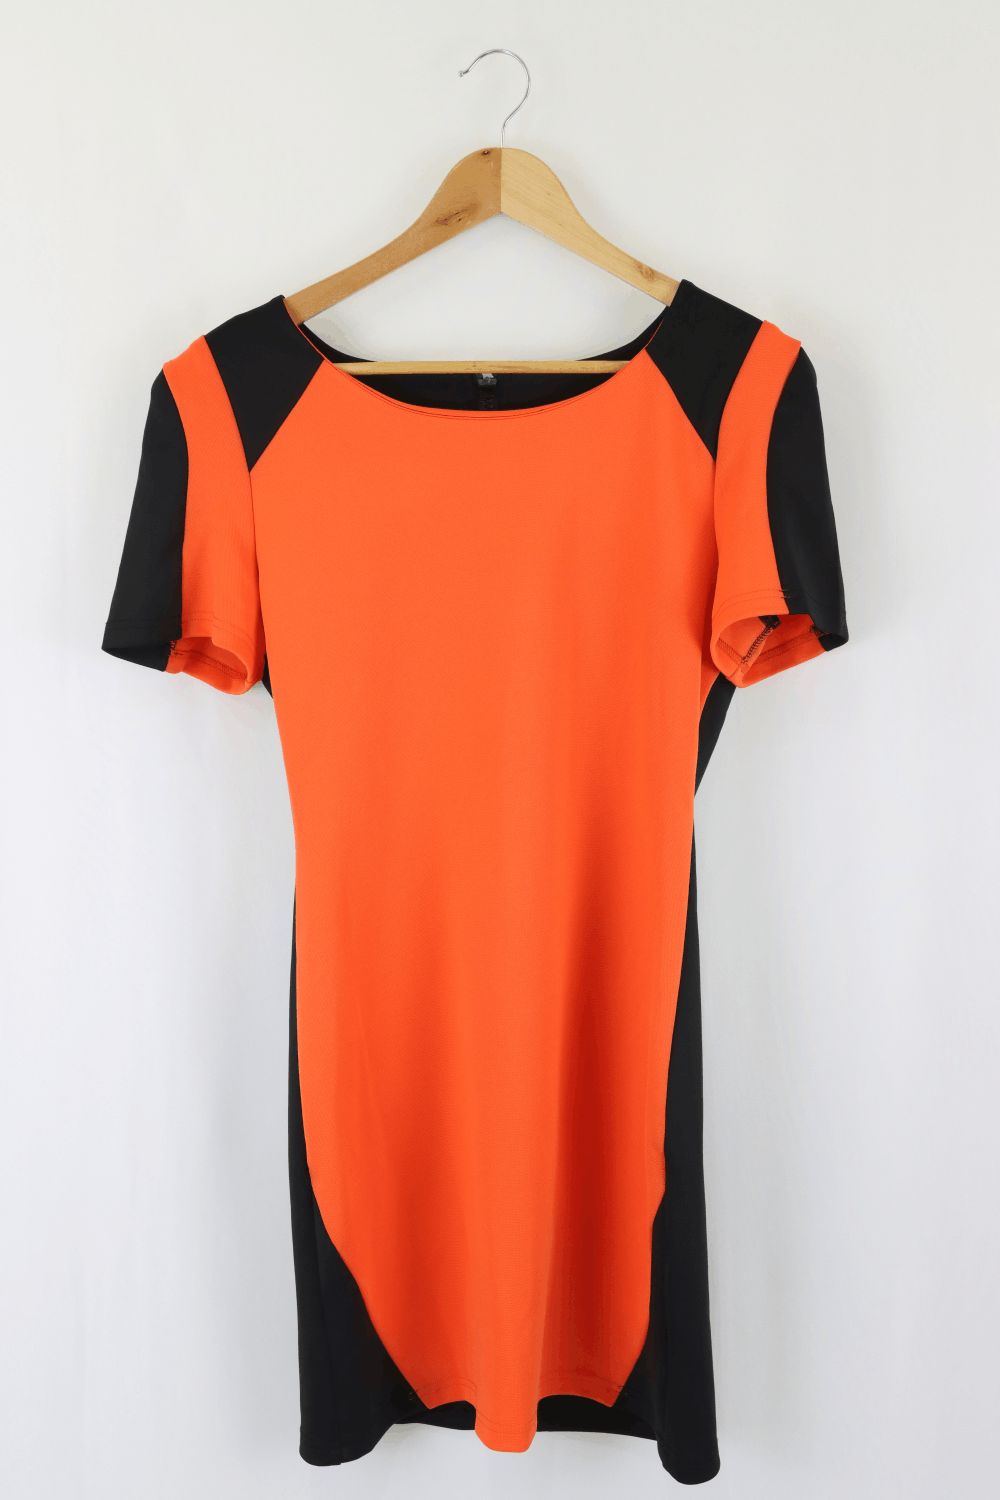 Zed Alliance Orange And Black Dress S